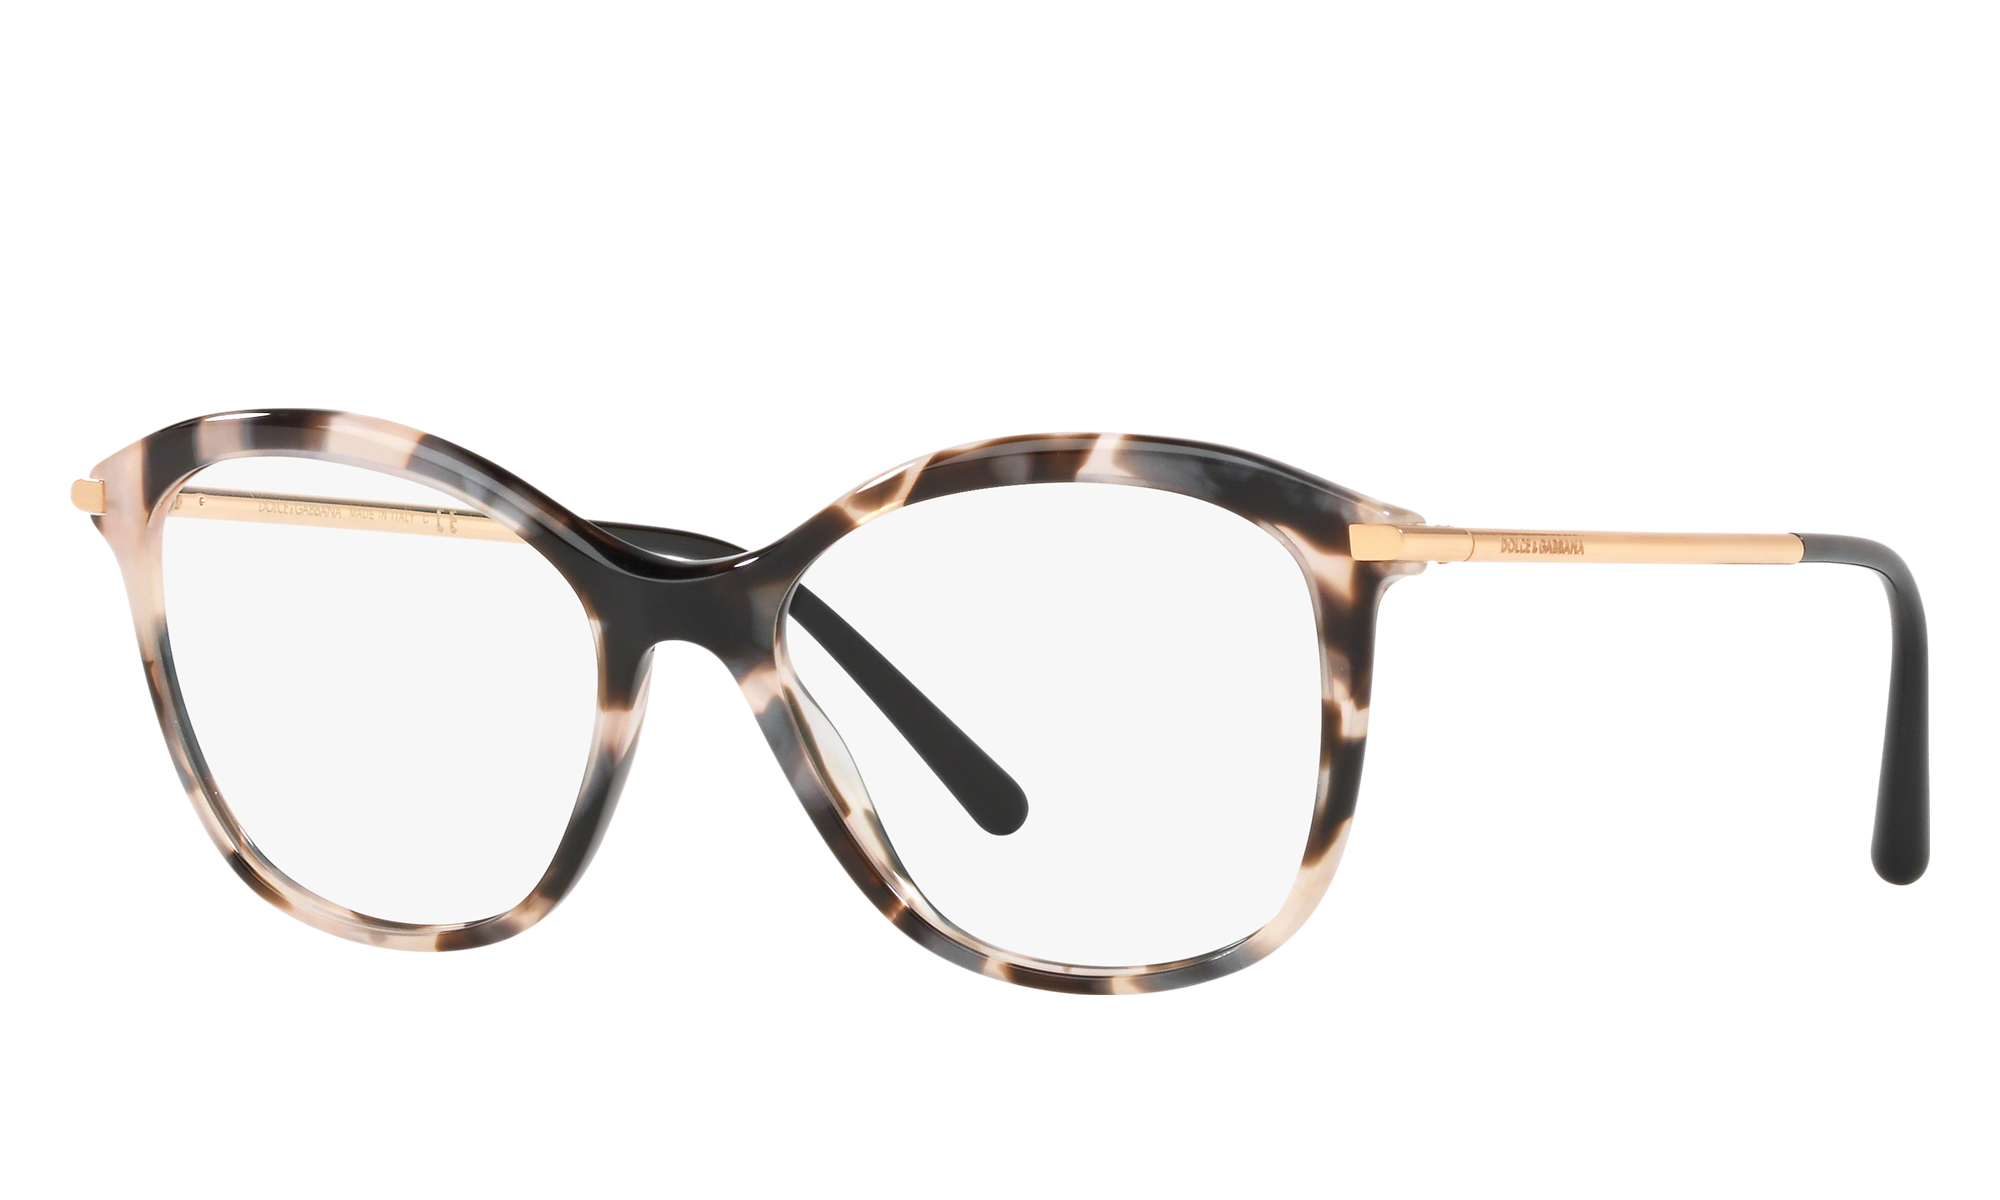 Dolce & Gabbana DG3299 Pearl Grey Havana Eyeglasses | Glasses.com ...